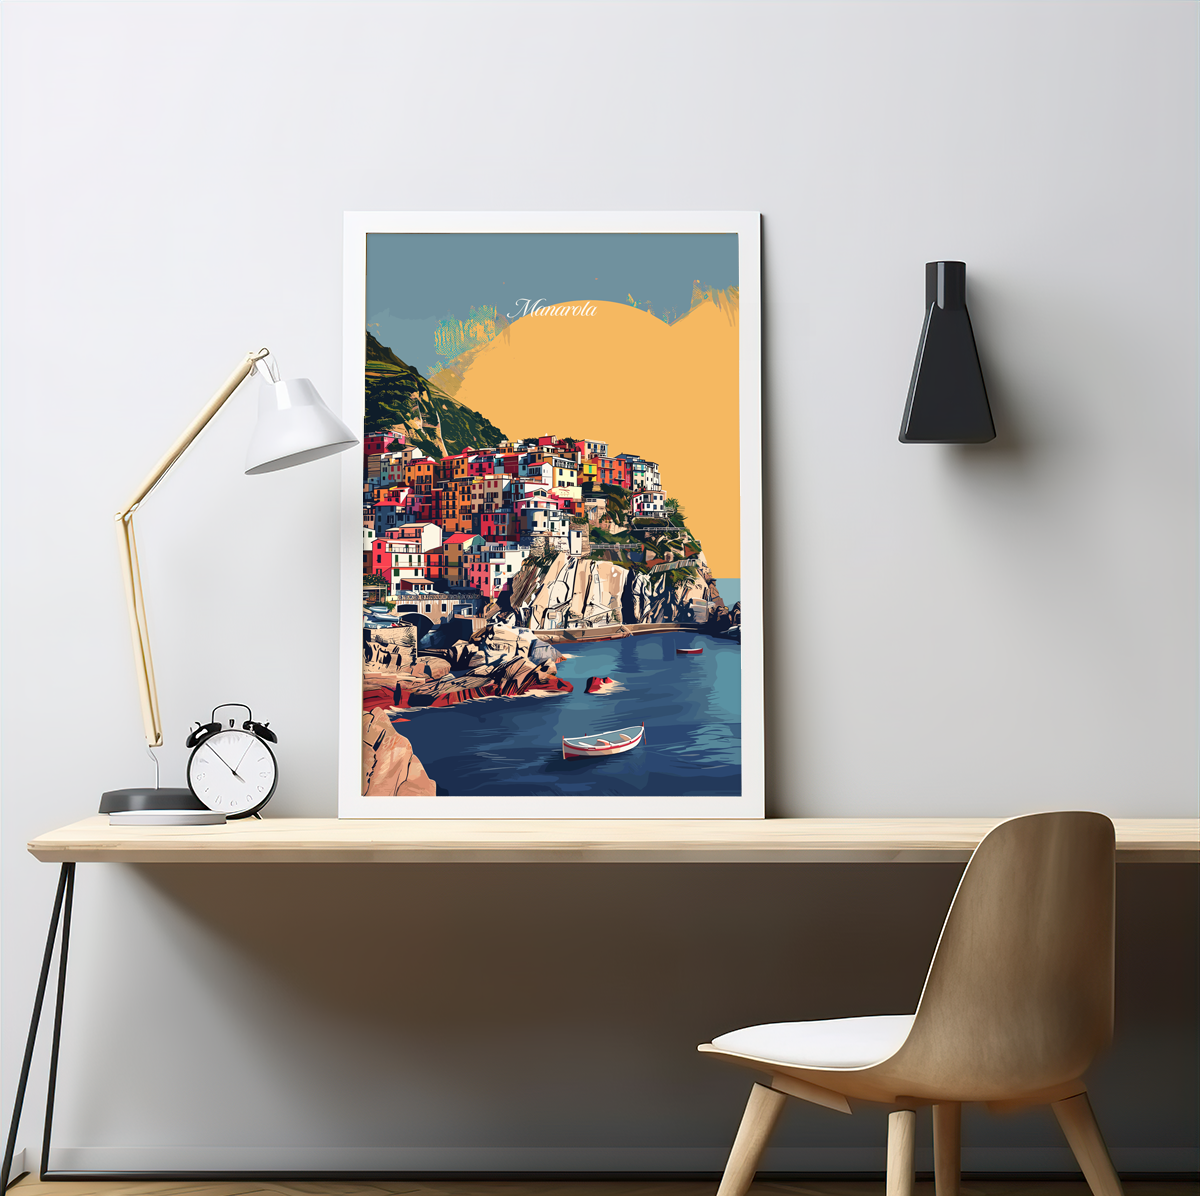 Manarola poster by bon voyage design